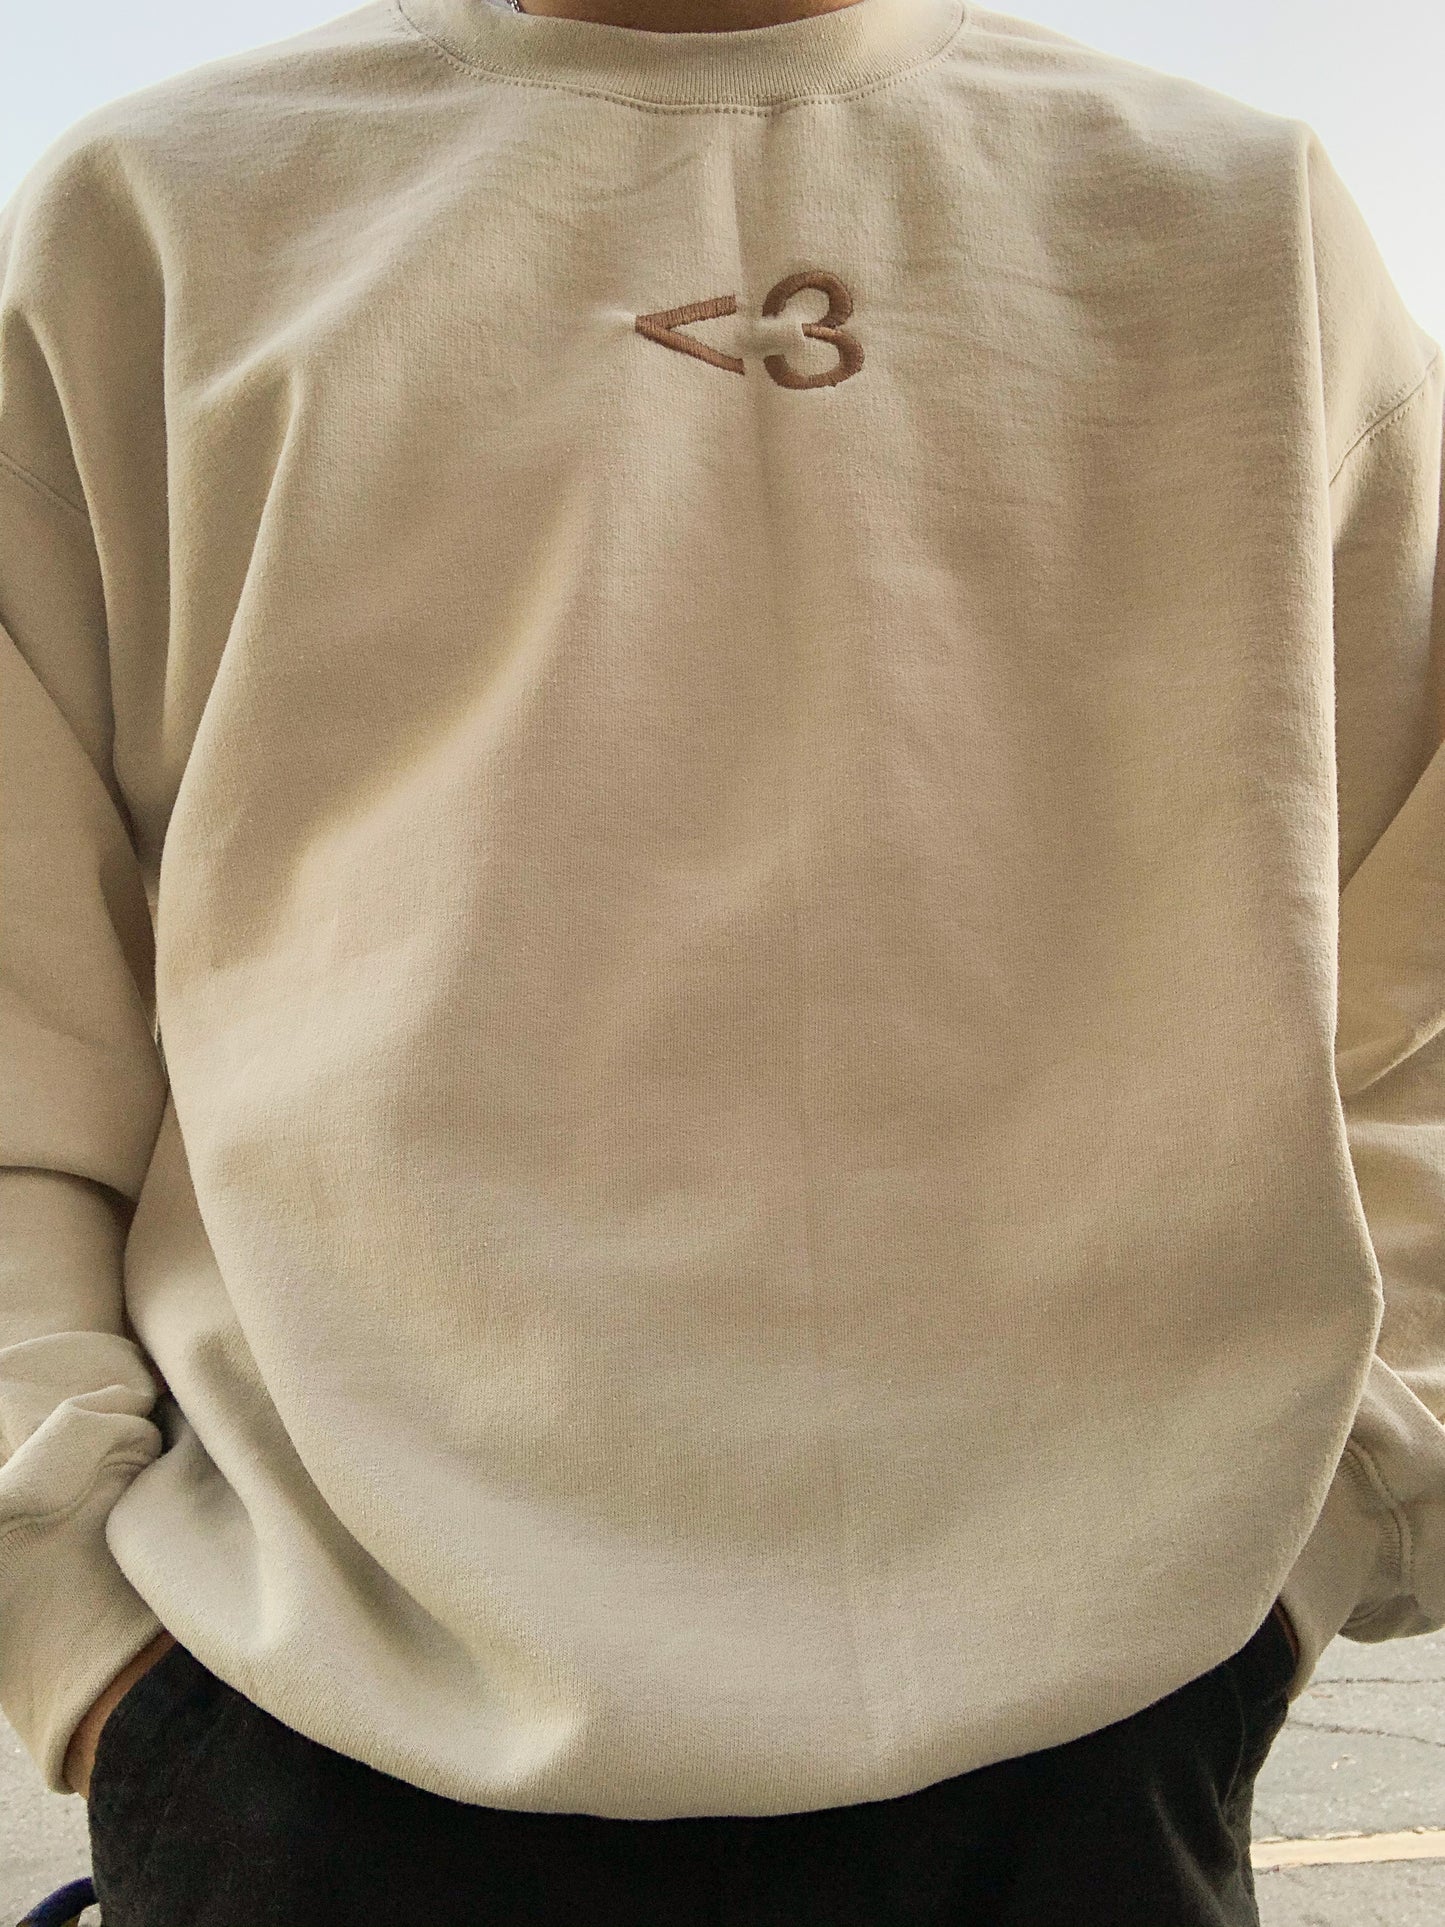 Heart <3 Tan Embroidered Singular Sweatshirt